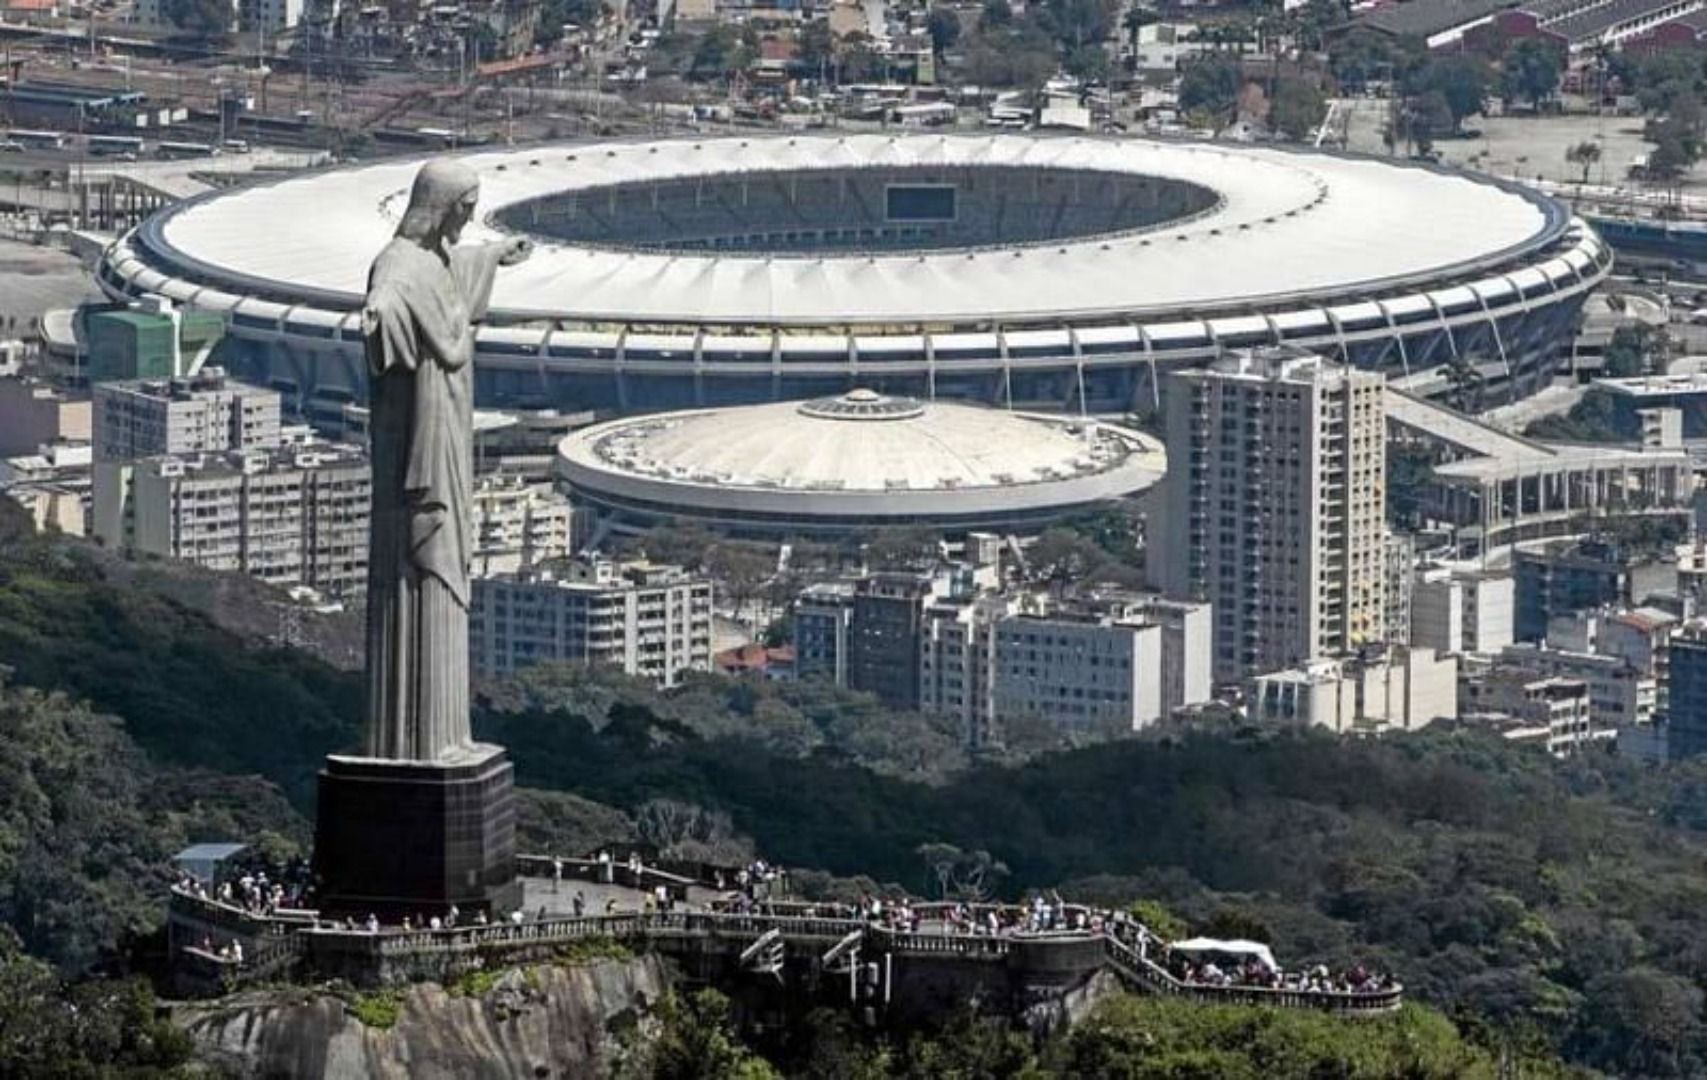 Christ the Redeemer statue overlooks the imposing Maracana Stadium in Rio de Janeiro.